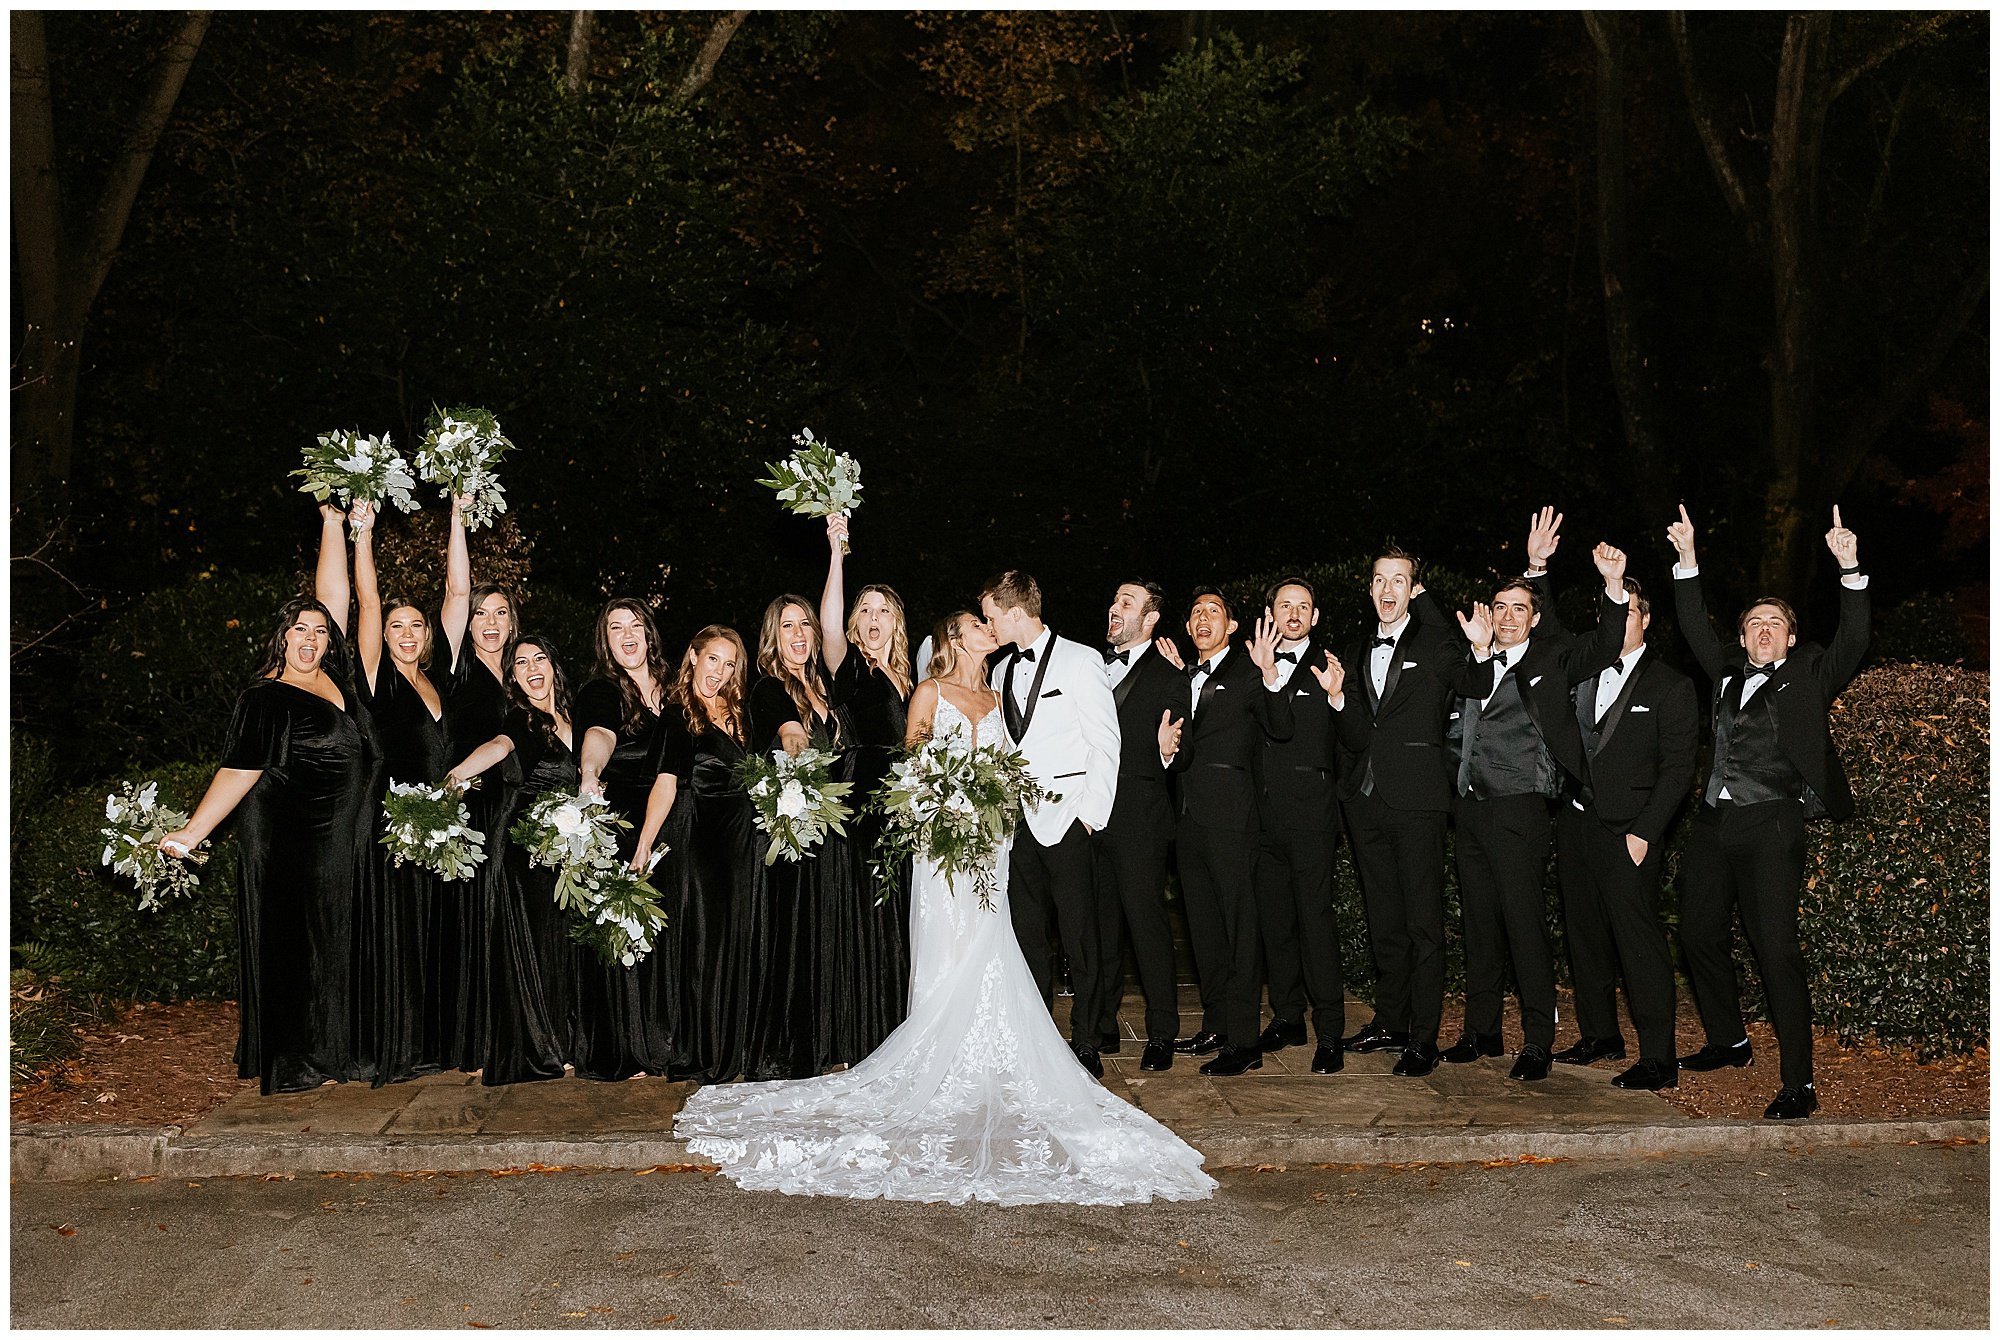 The Estate wedding, Black bridesmaids dresses, Gift giving at wedding, Atlanta Wedding/ Engagement Photographer